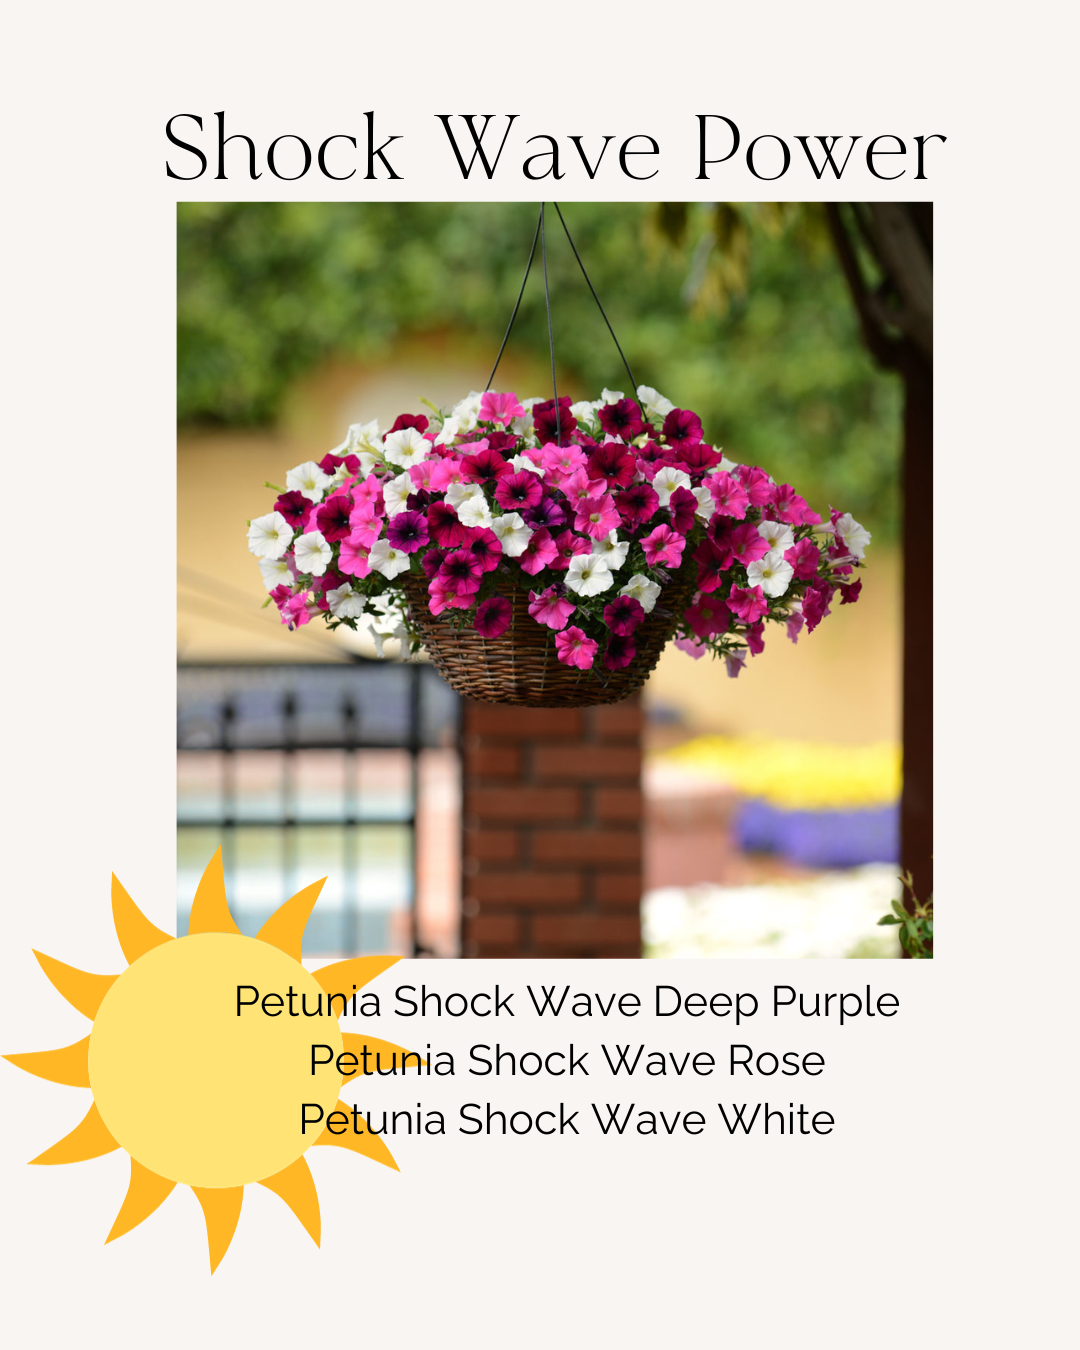 Shock Wave Power